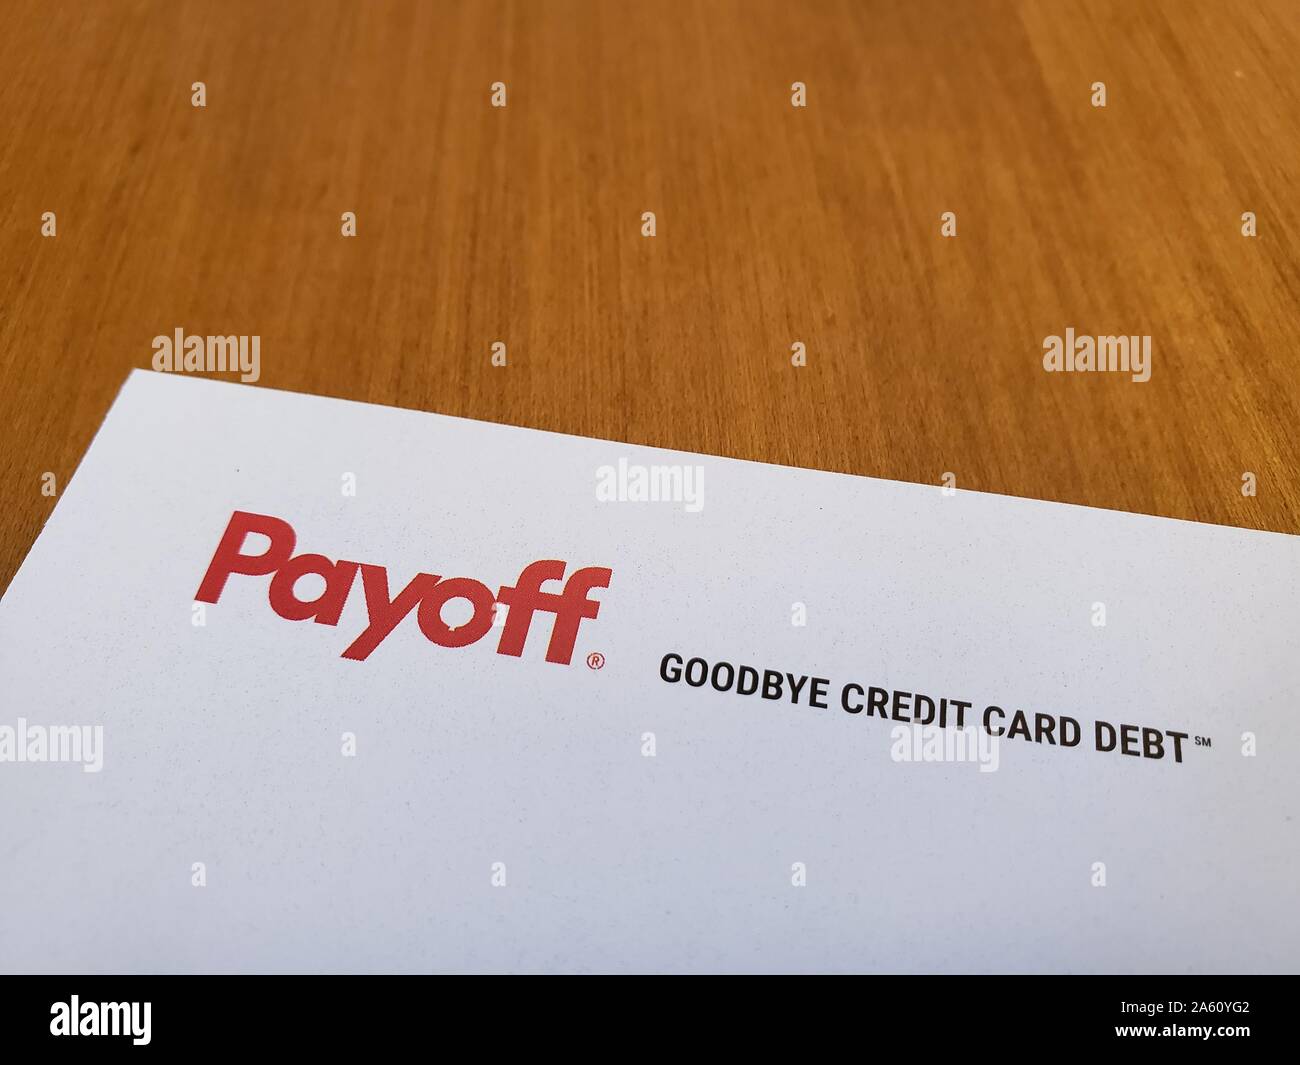 "Close-up of Logo for Debt Consolidation Company Payoff", mit Slogan Goodbye Credit Card Debt, auf Papier auf hellem Holzhintergrund, 10. September 2019." () Stockfoto